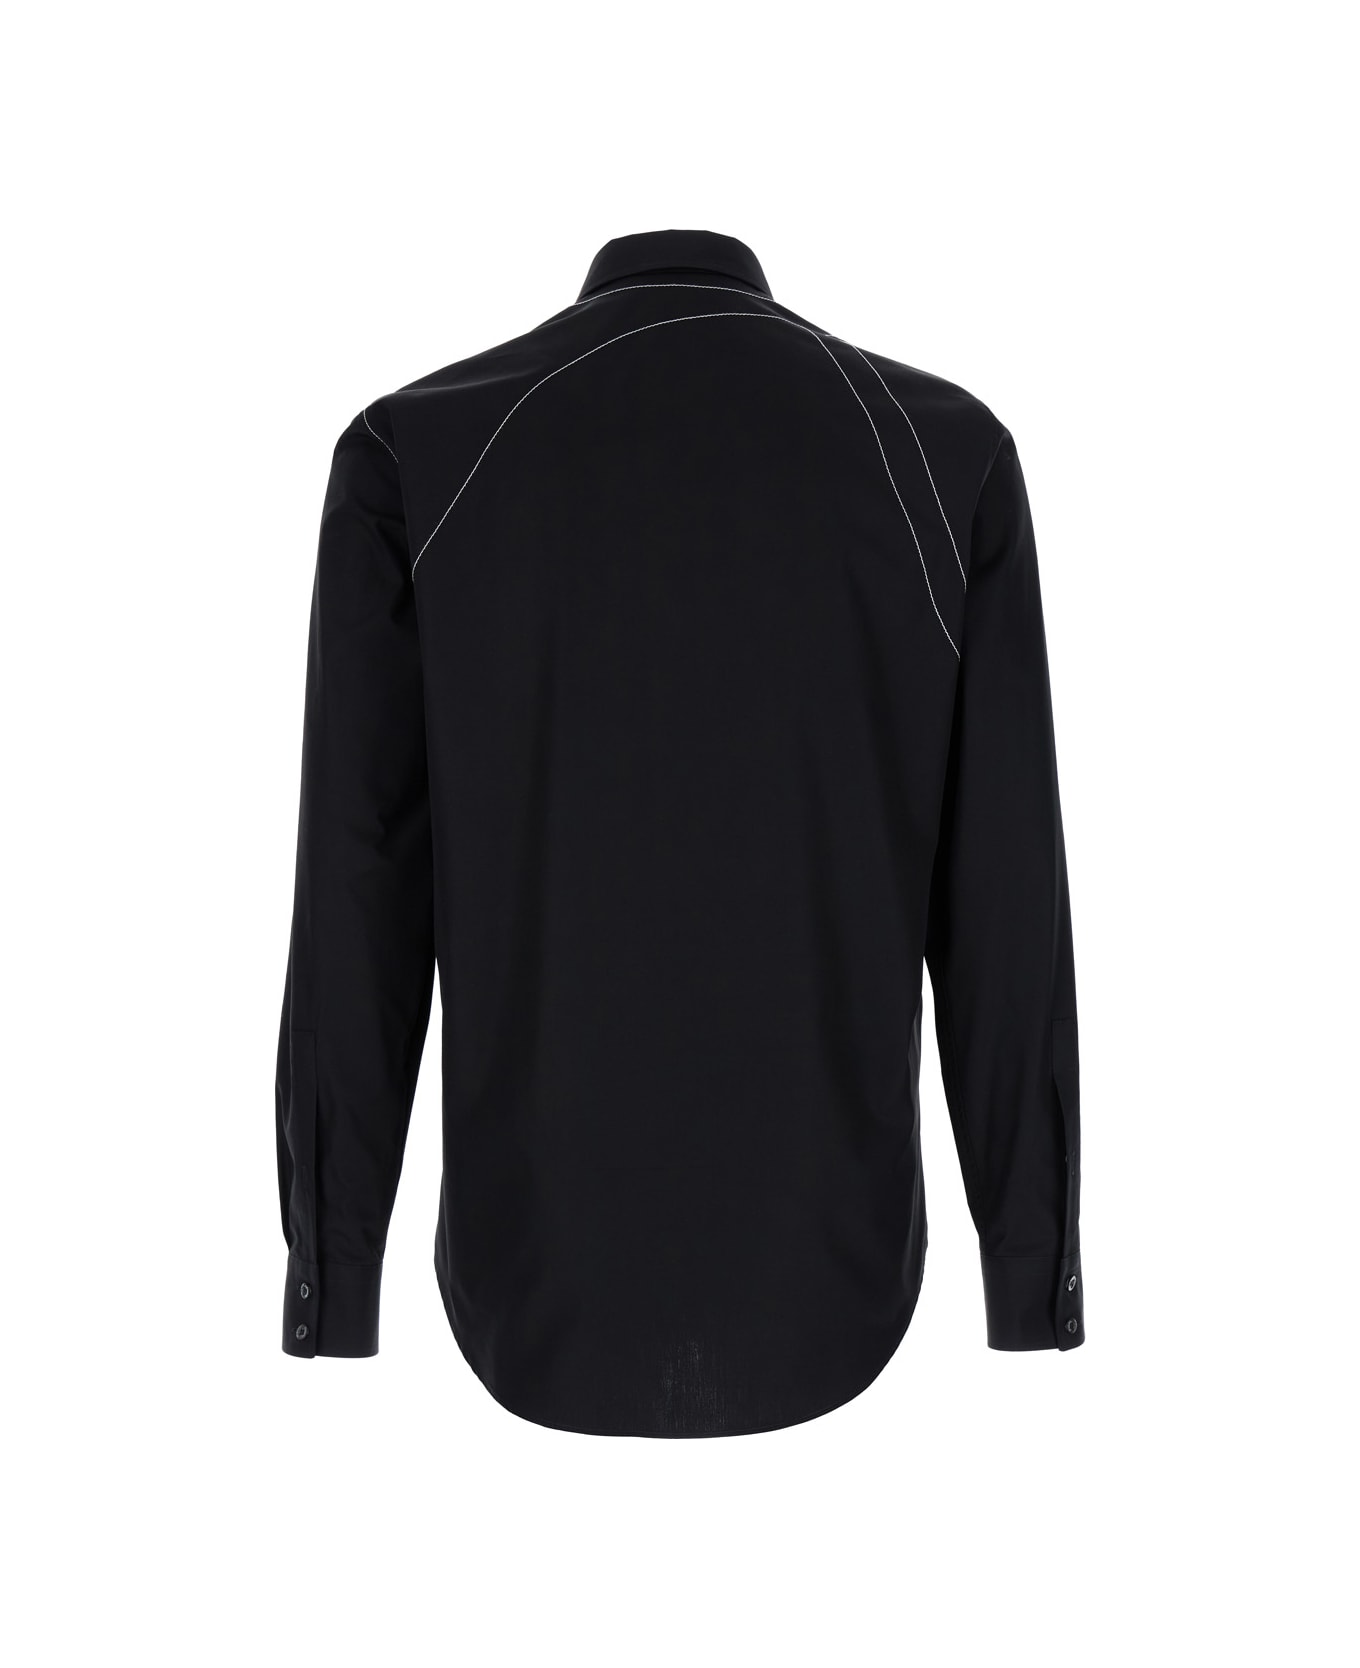 Alexander McQueen Black Shirt With White Stitchings In Cotton Man - Black